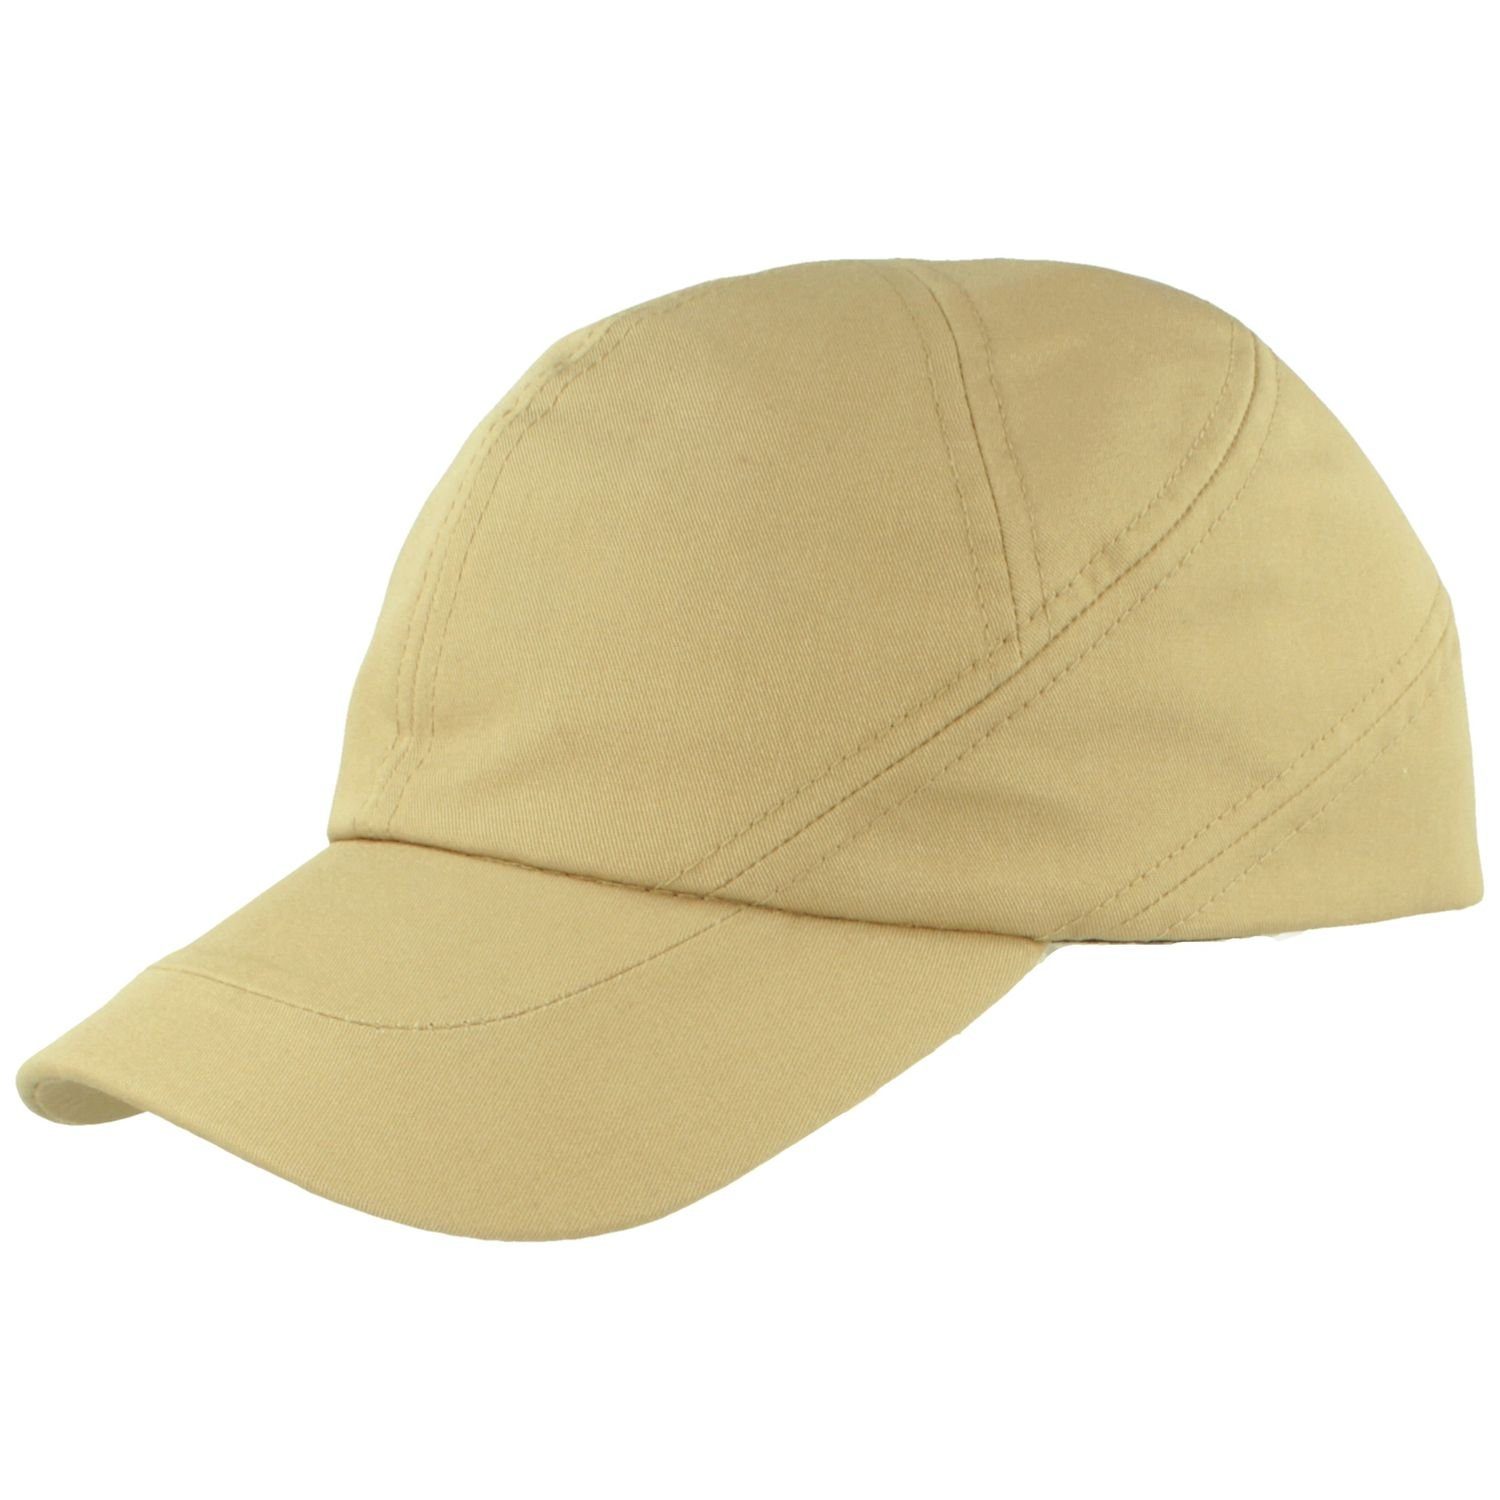 Breiter Baseball Cap Sommer-Cap uni mit UV-Schutz 50 702 khaki